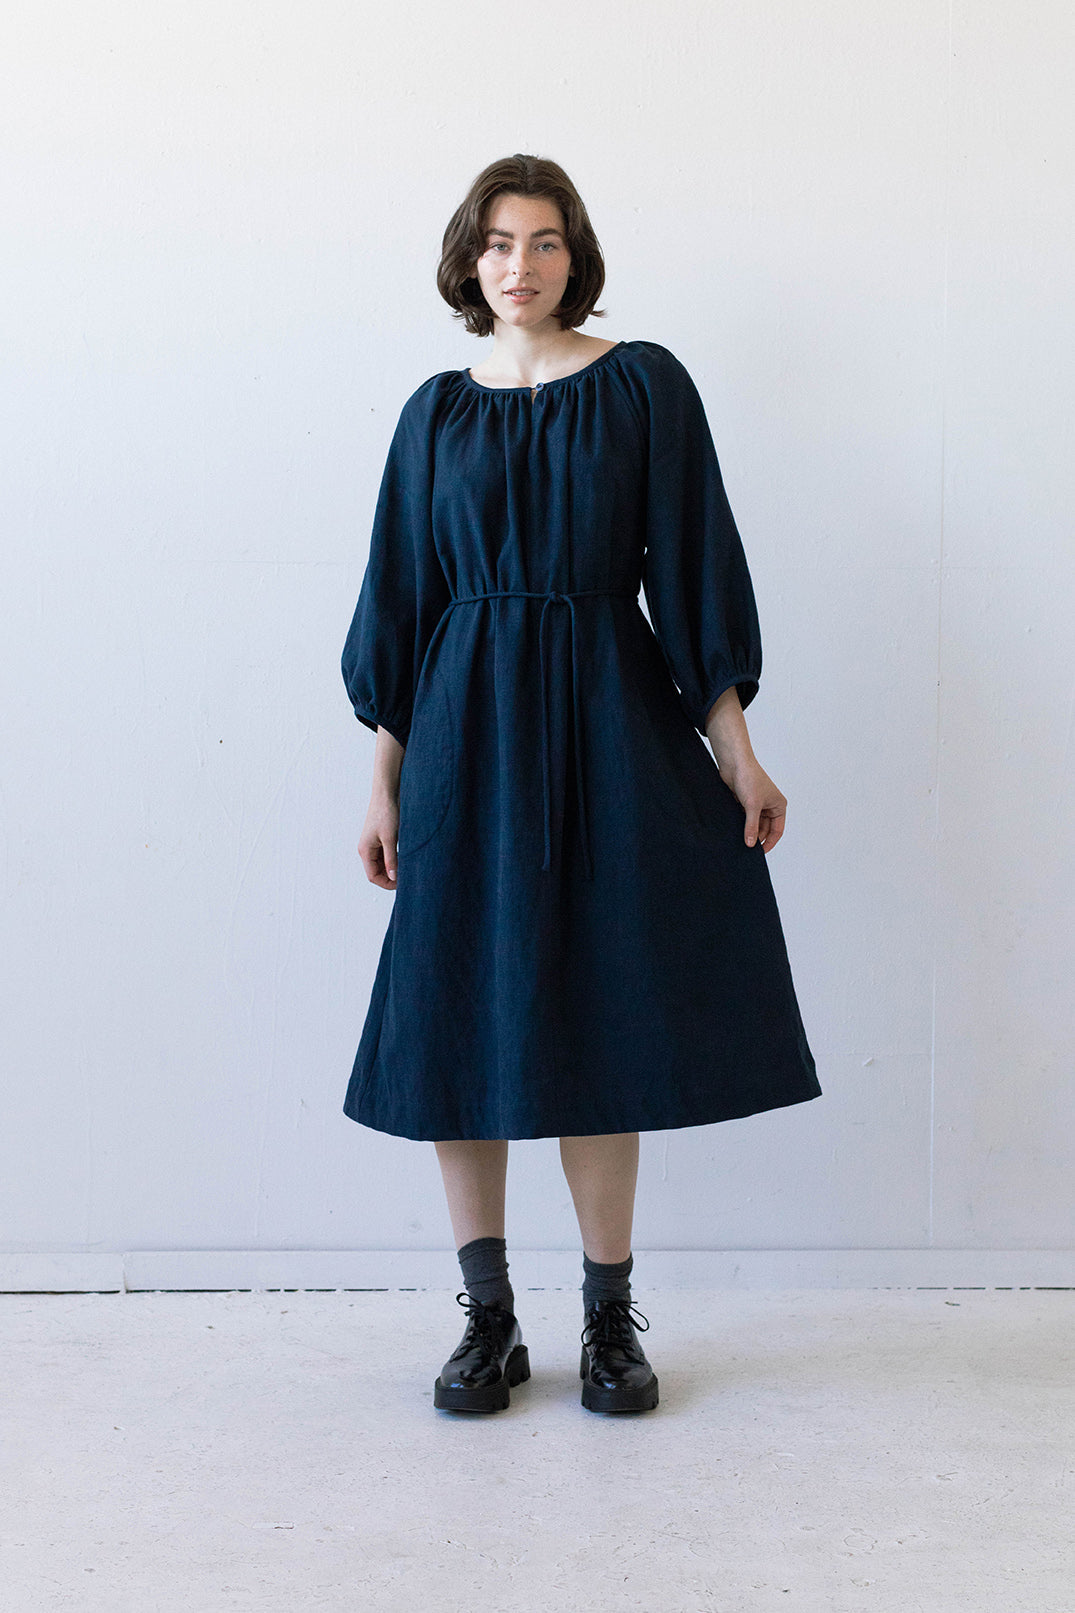 SAMPLE SALE - Prisca Dress in Dark Indigo Linen - SMALL/MEDIUM